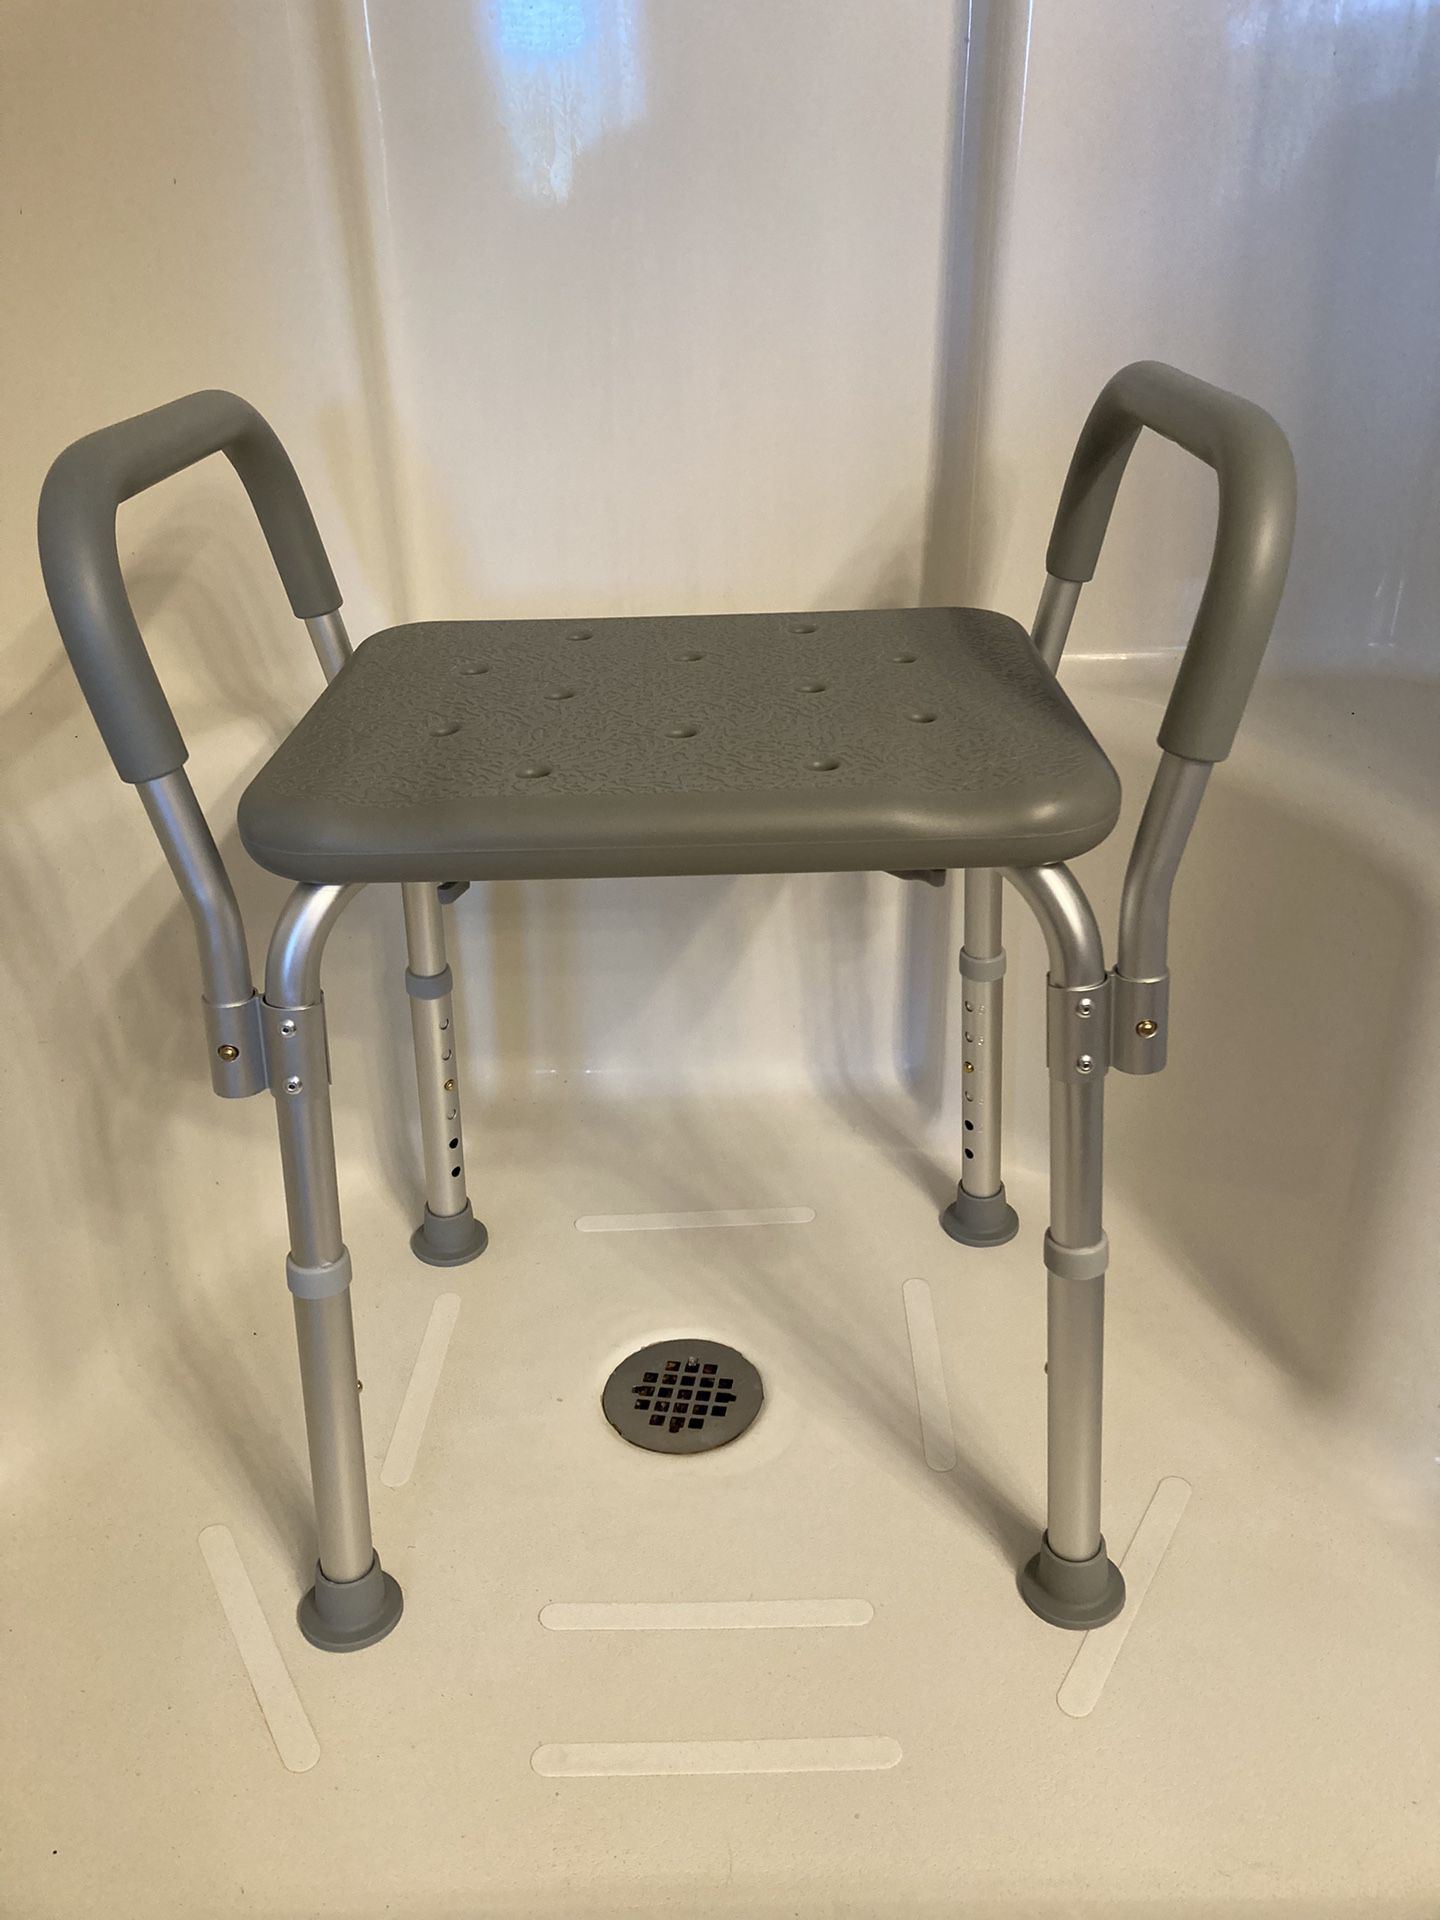 Bath/shower seat (new)